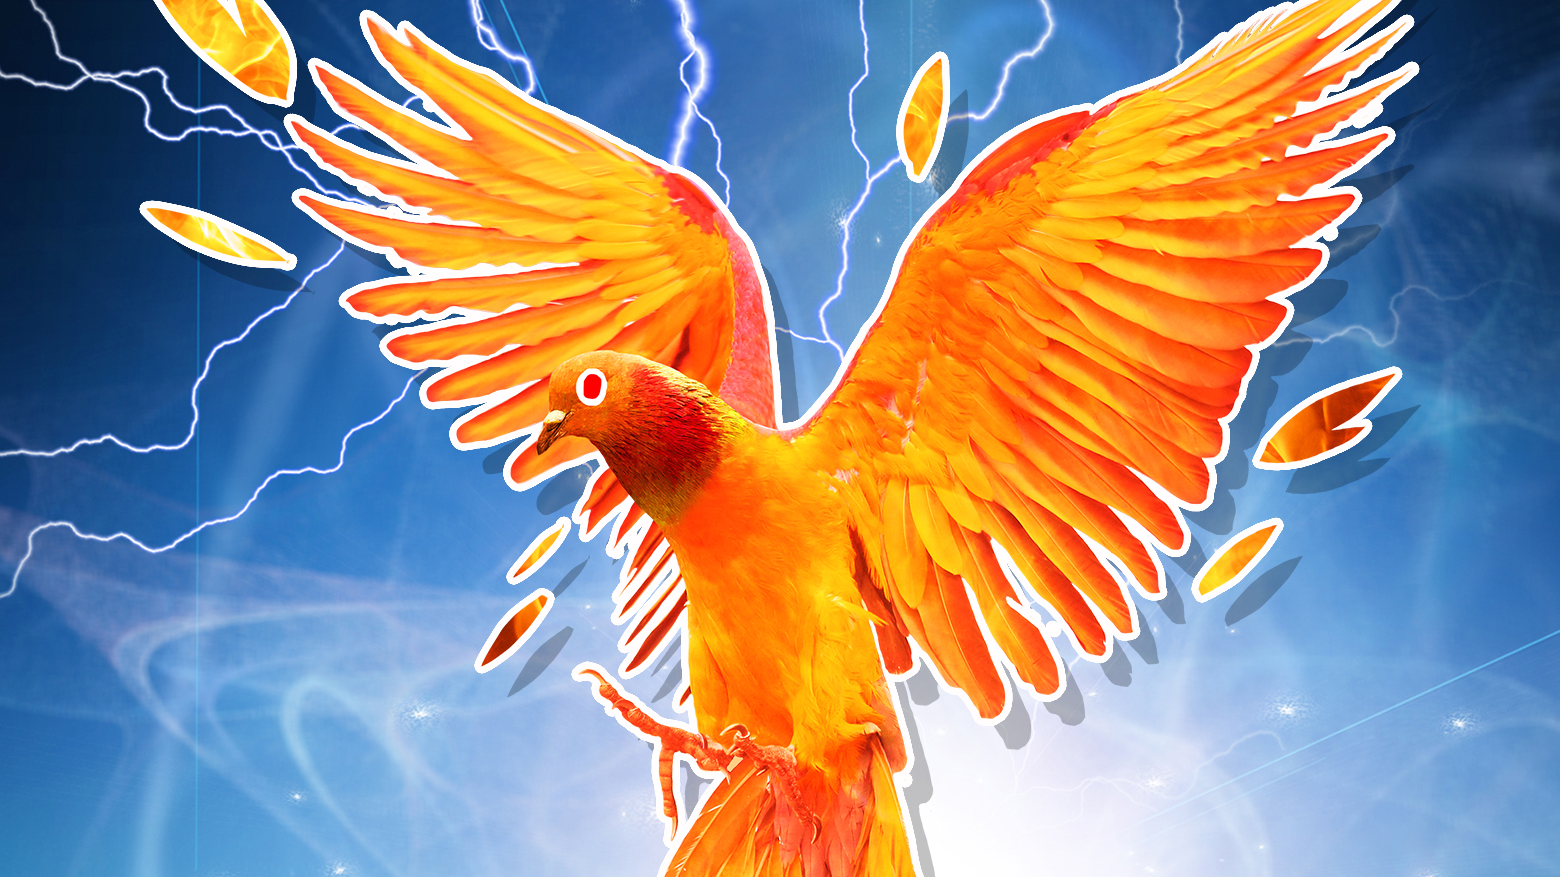 A flaming phoenix